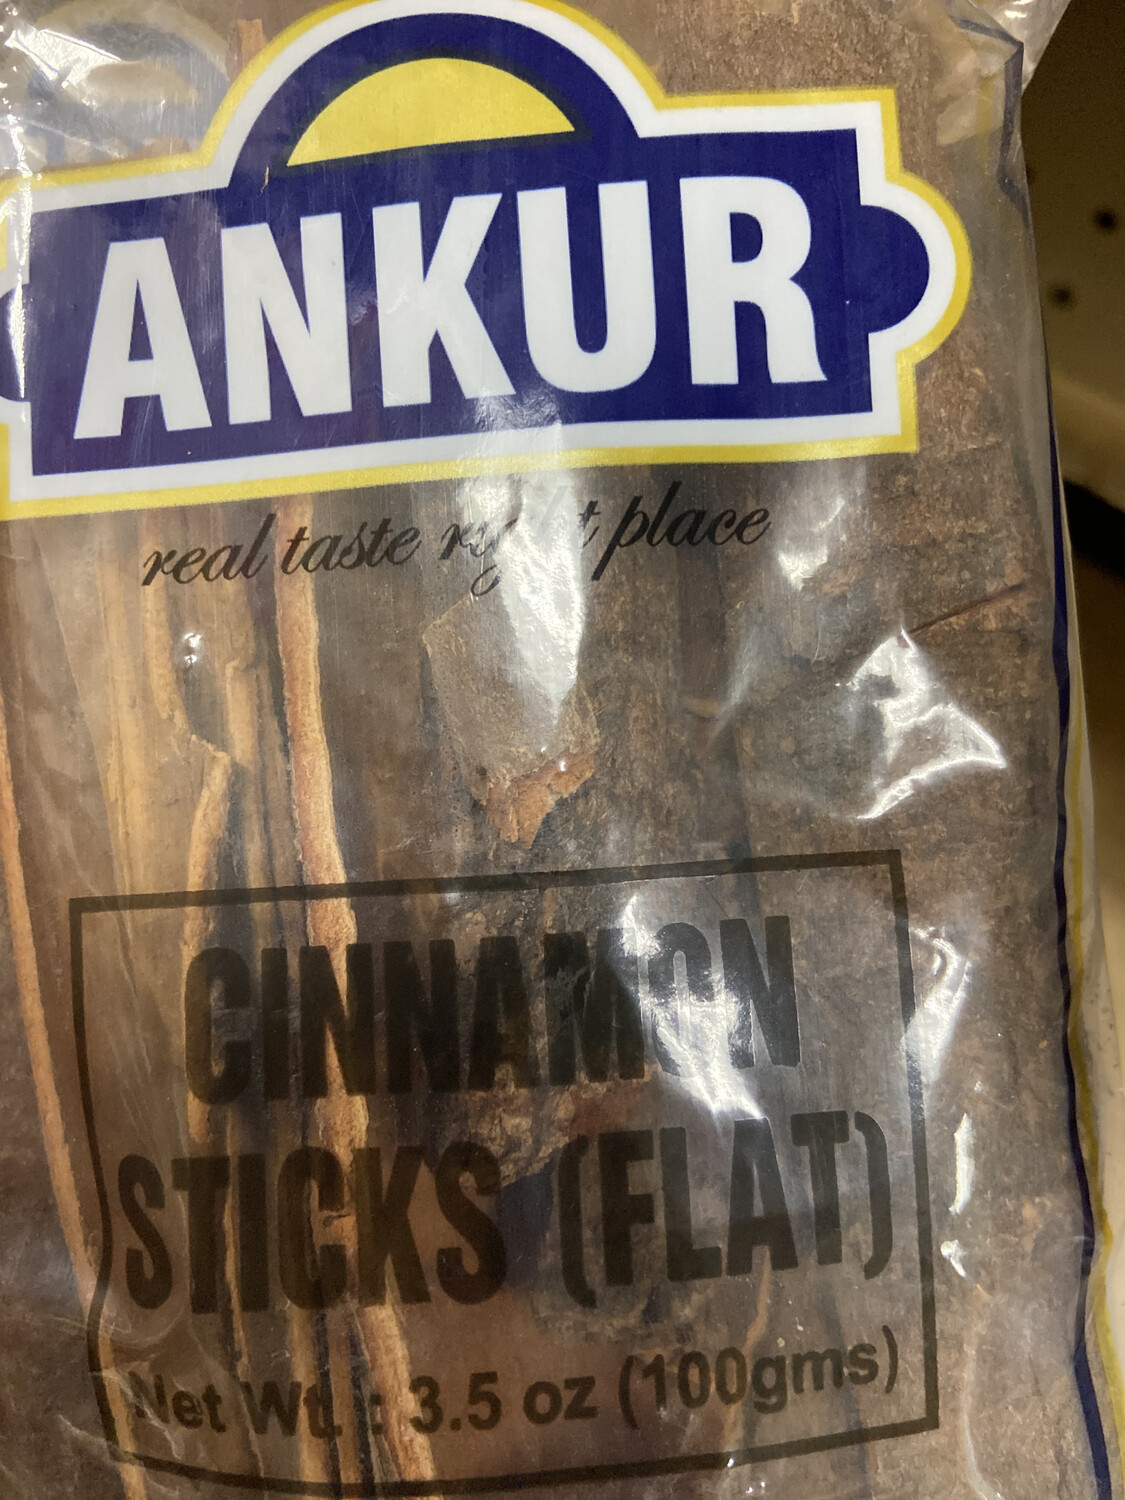 Ankur Cinnamon Sticks Flat 100g